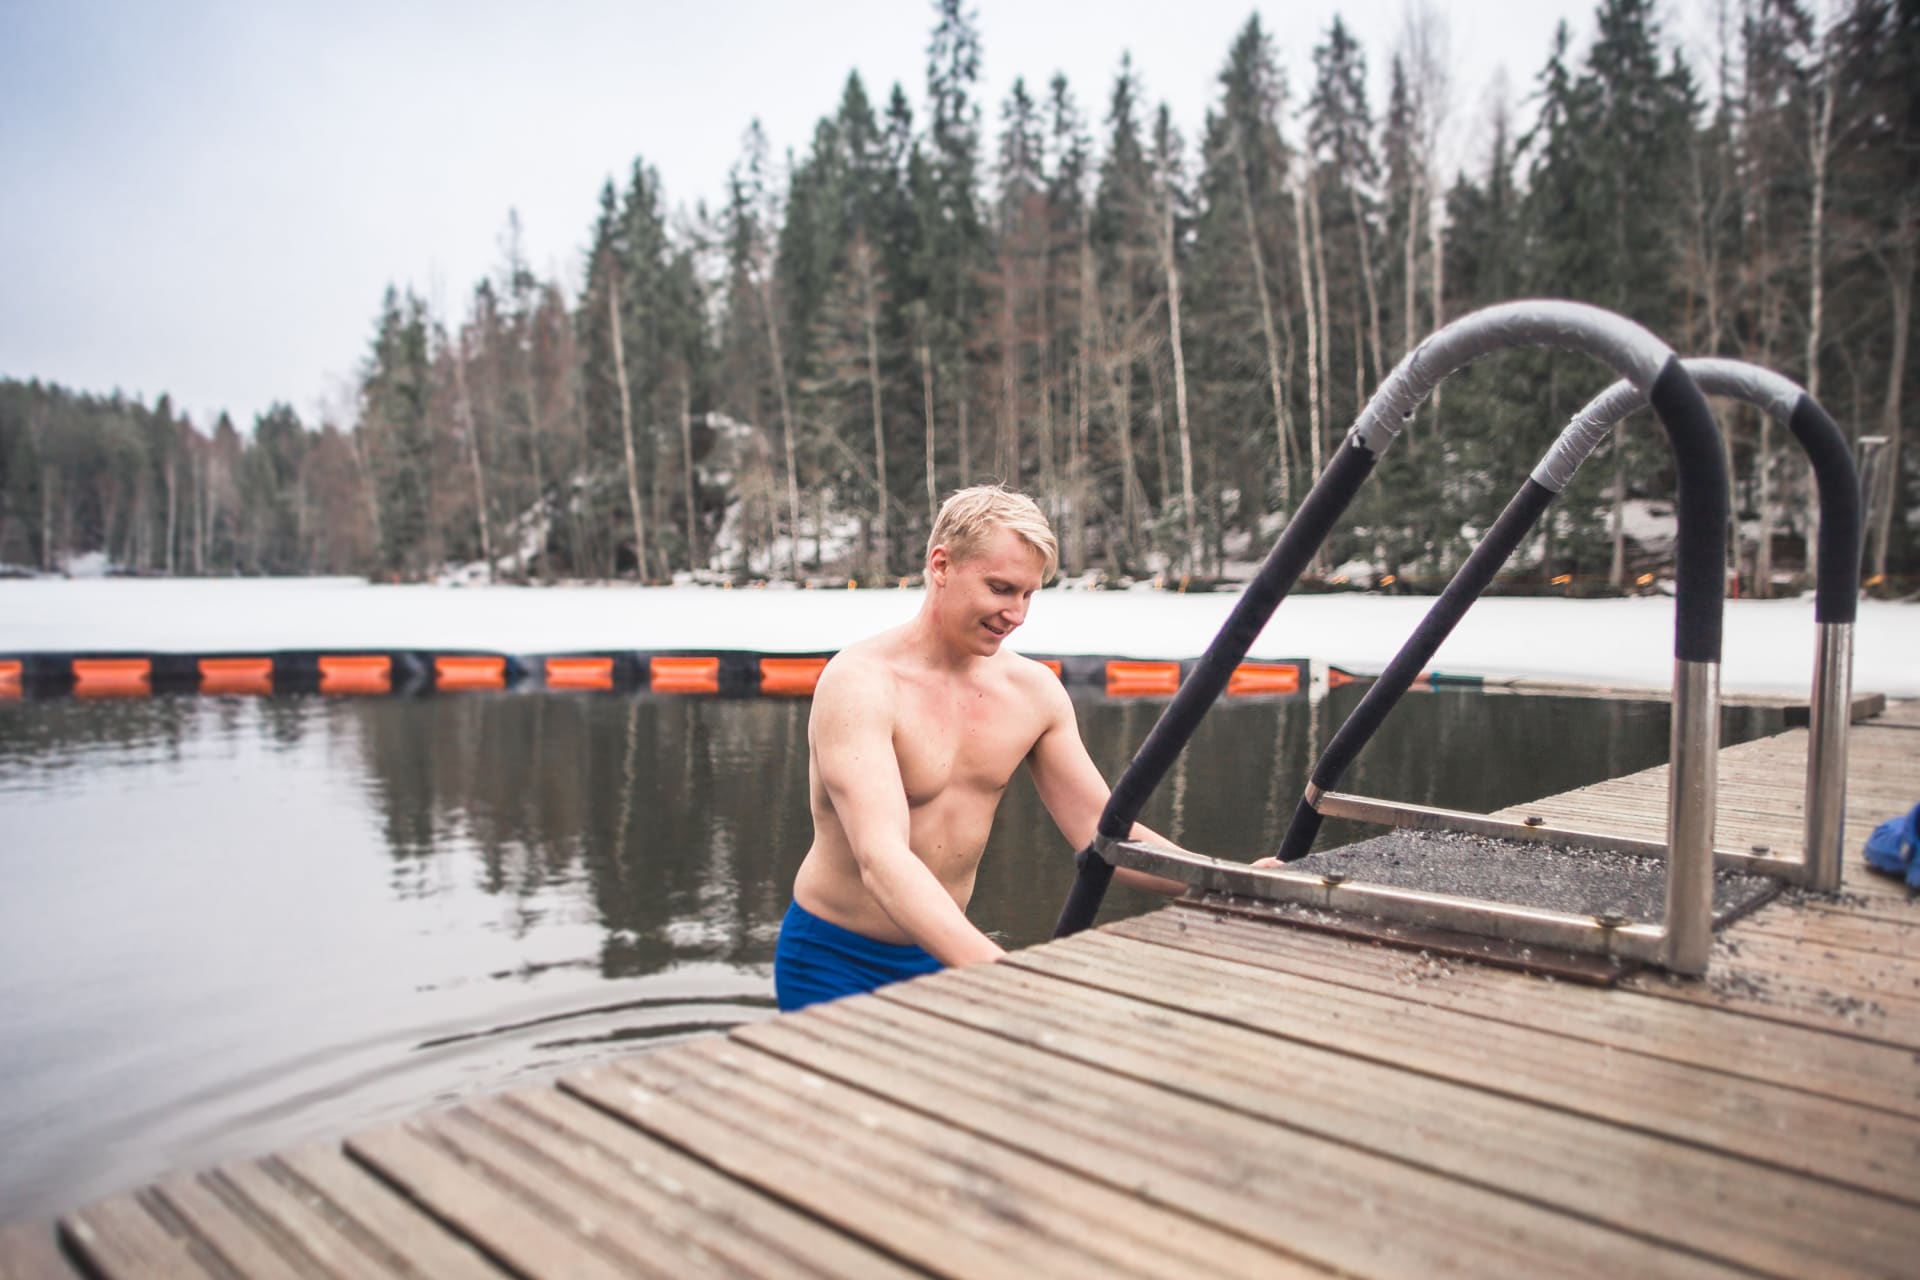 Winter swimming in the Suolijärvi lake